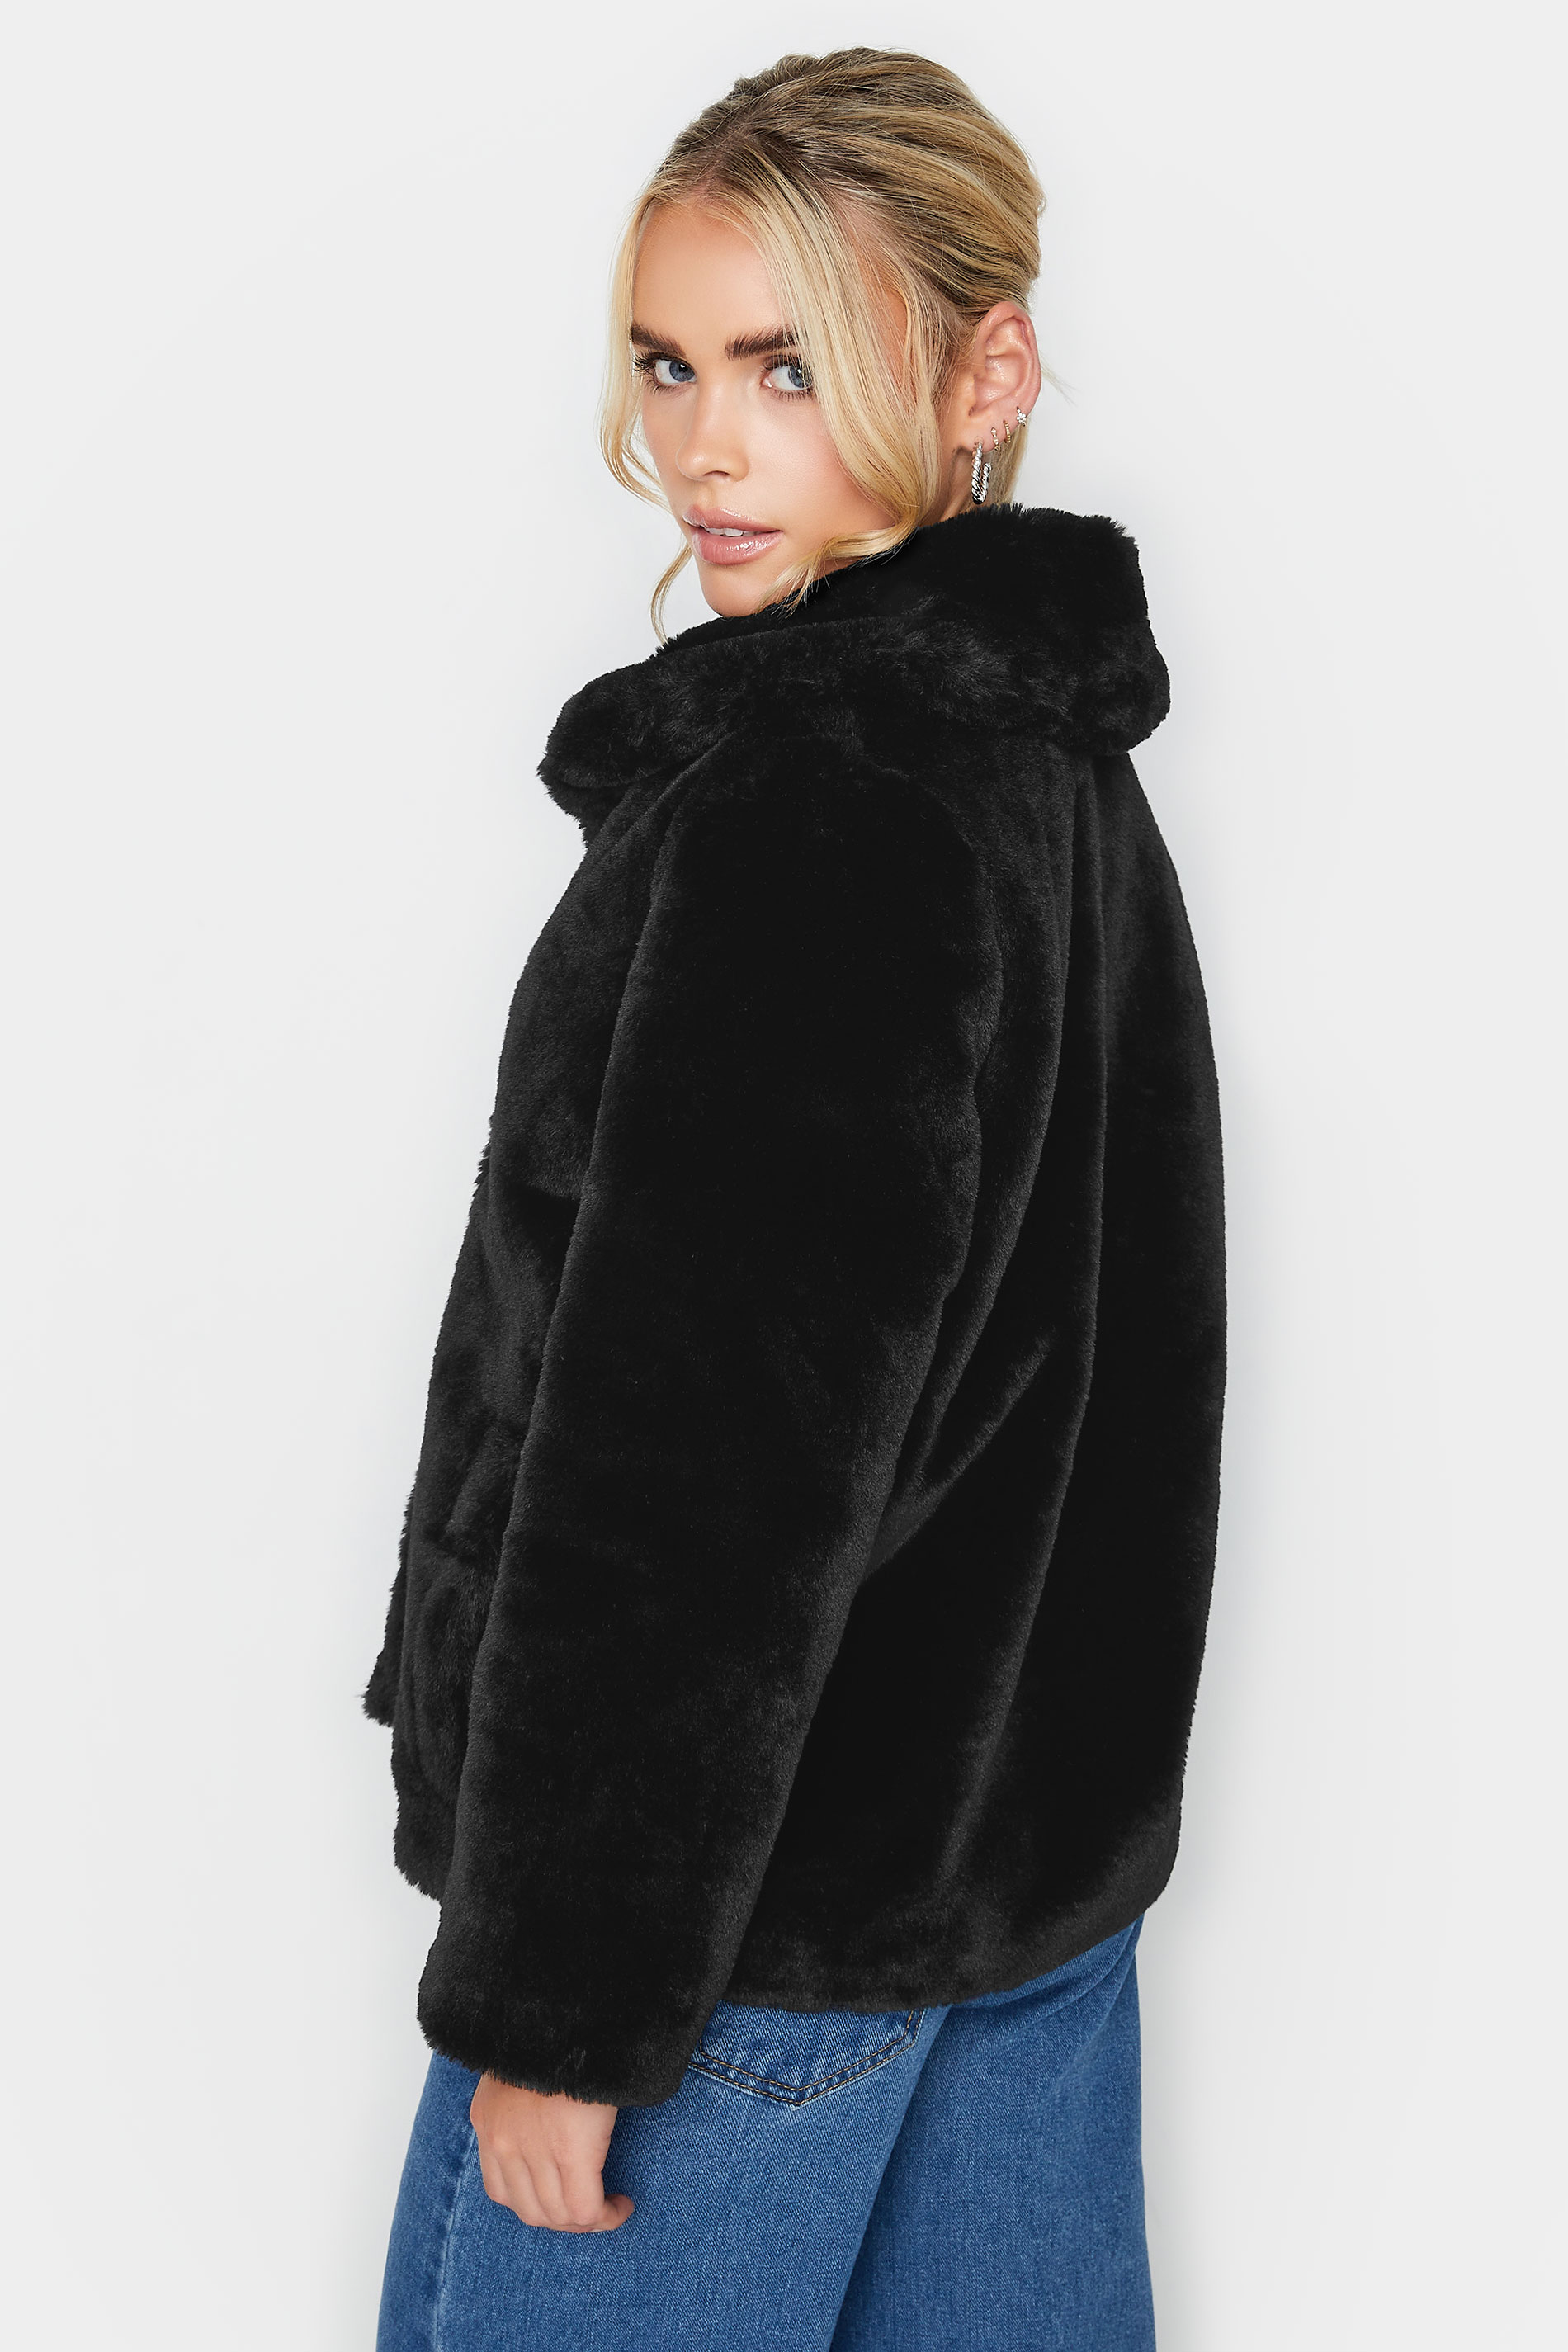 PixieGirl Black Faux Fur Coat | PixieGirl 3